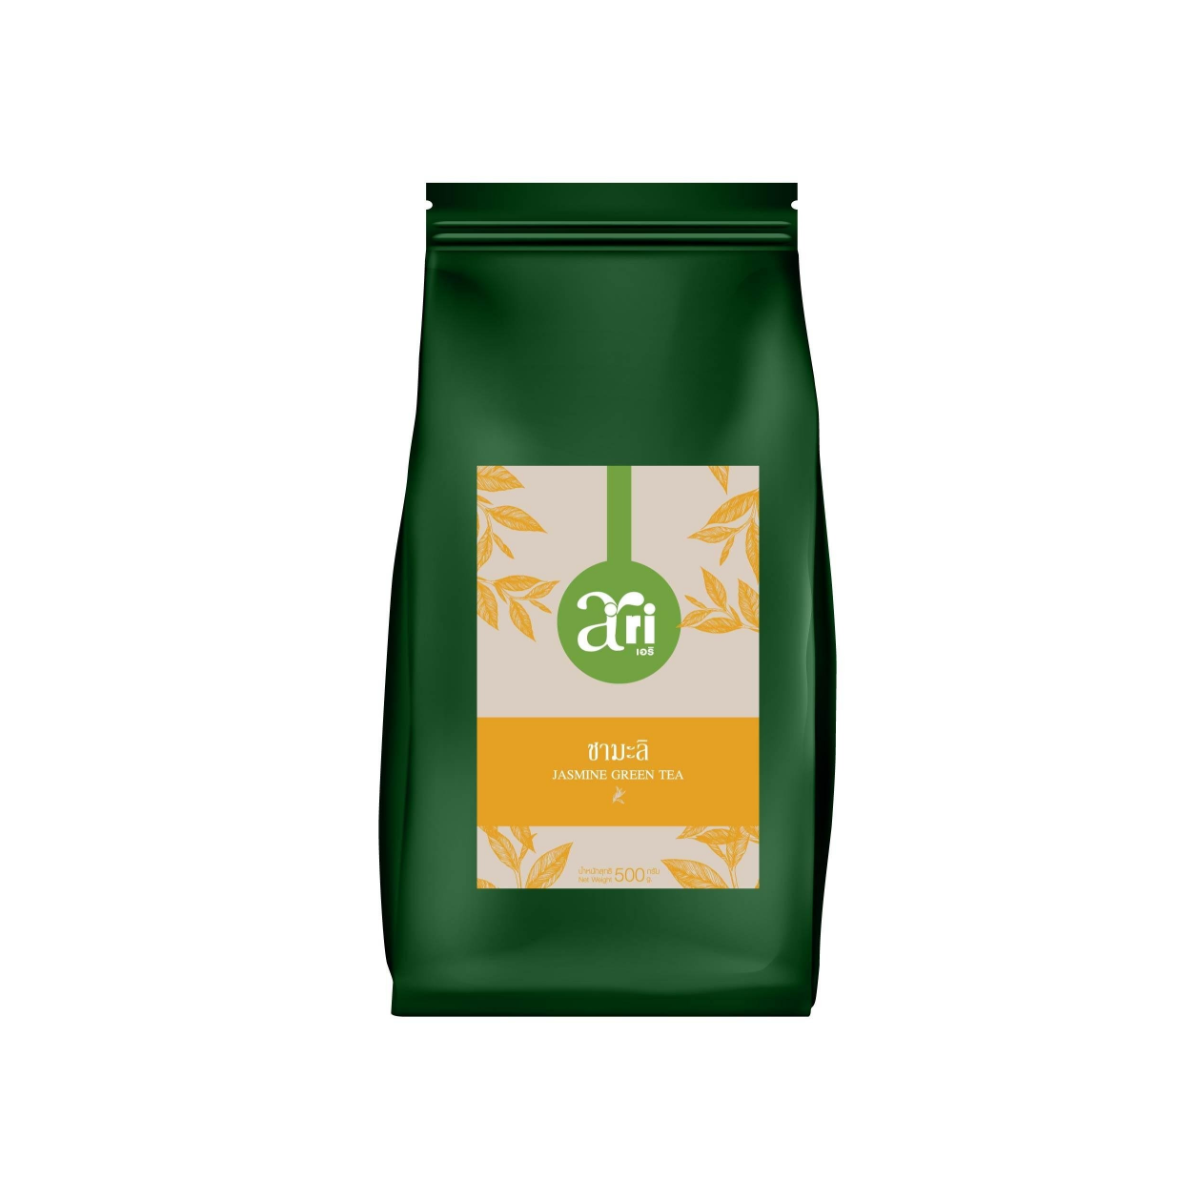 ARI - Jasmin Green Tea ใบชามะลิหอม